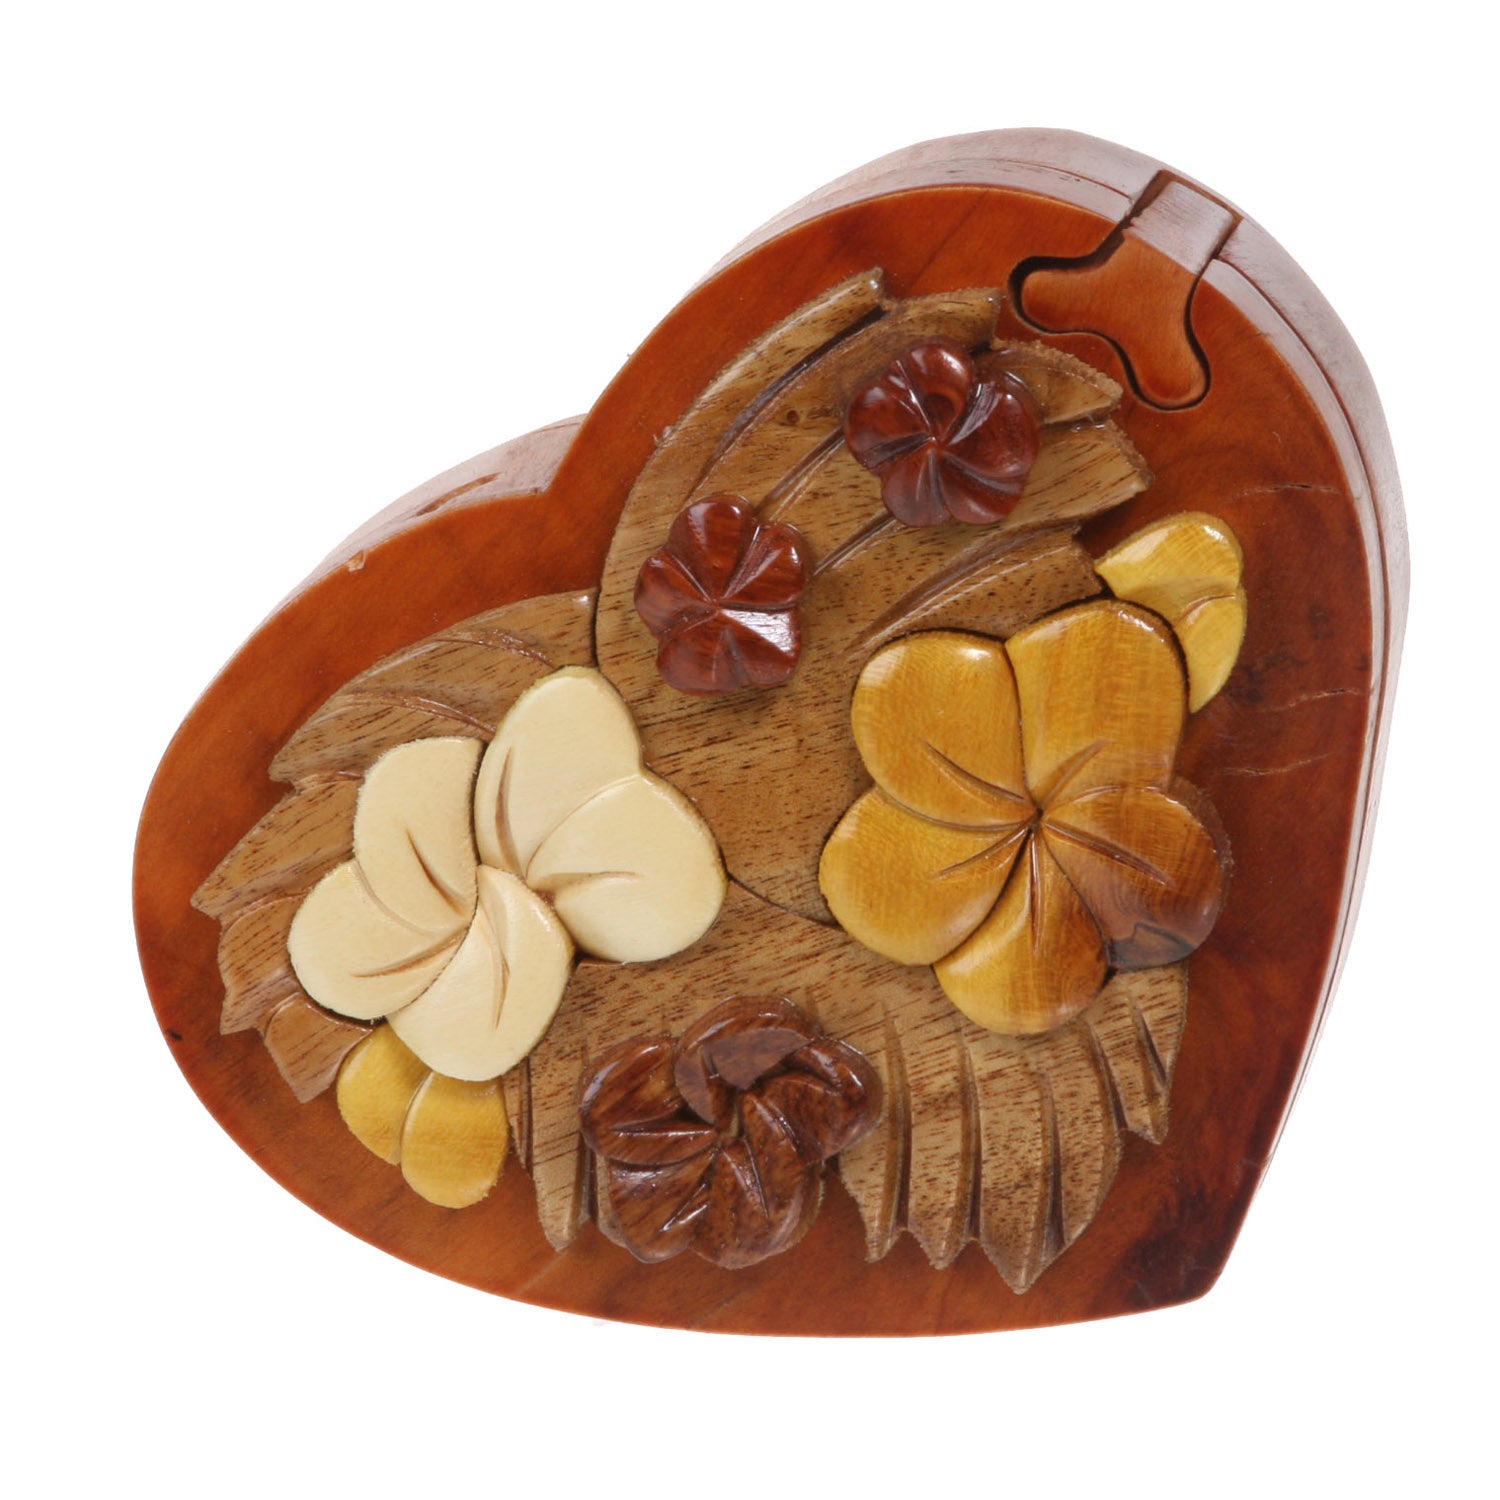 Handcrafted Wooden Heart Shape Secret Jewelry Puzzle Box - Heart & Flower